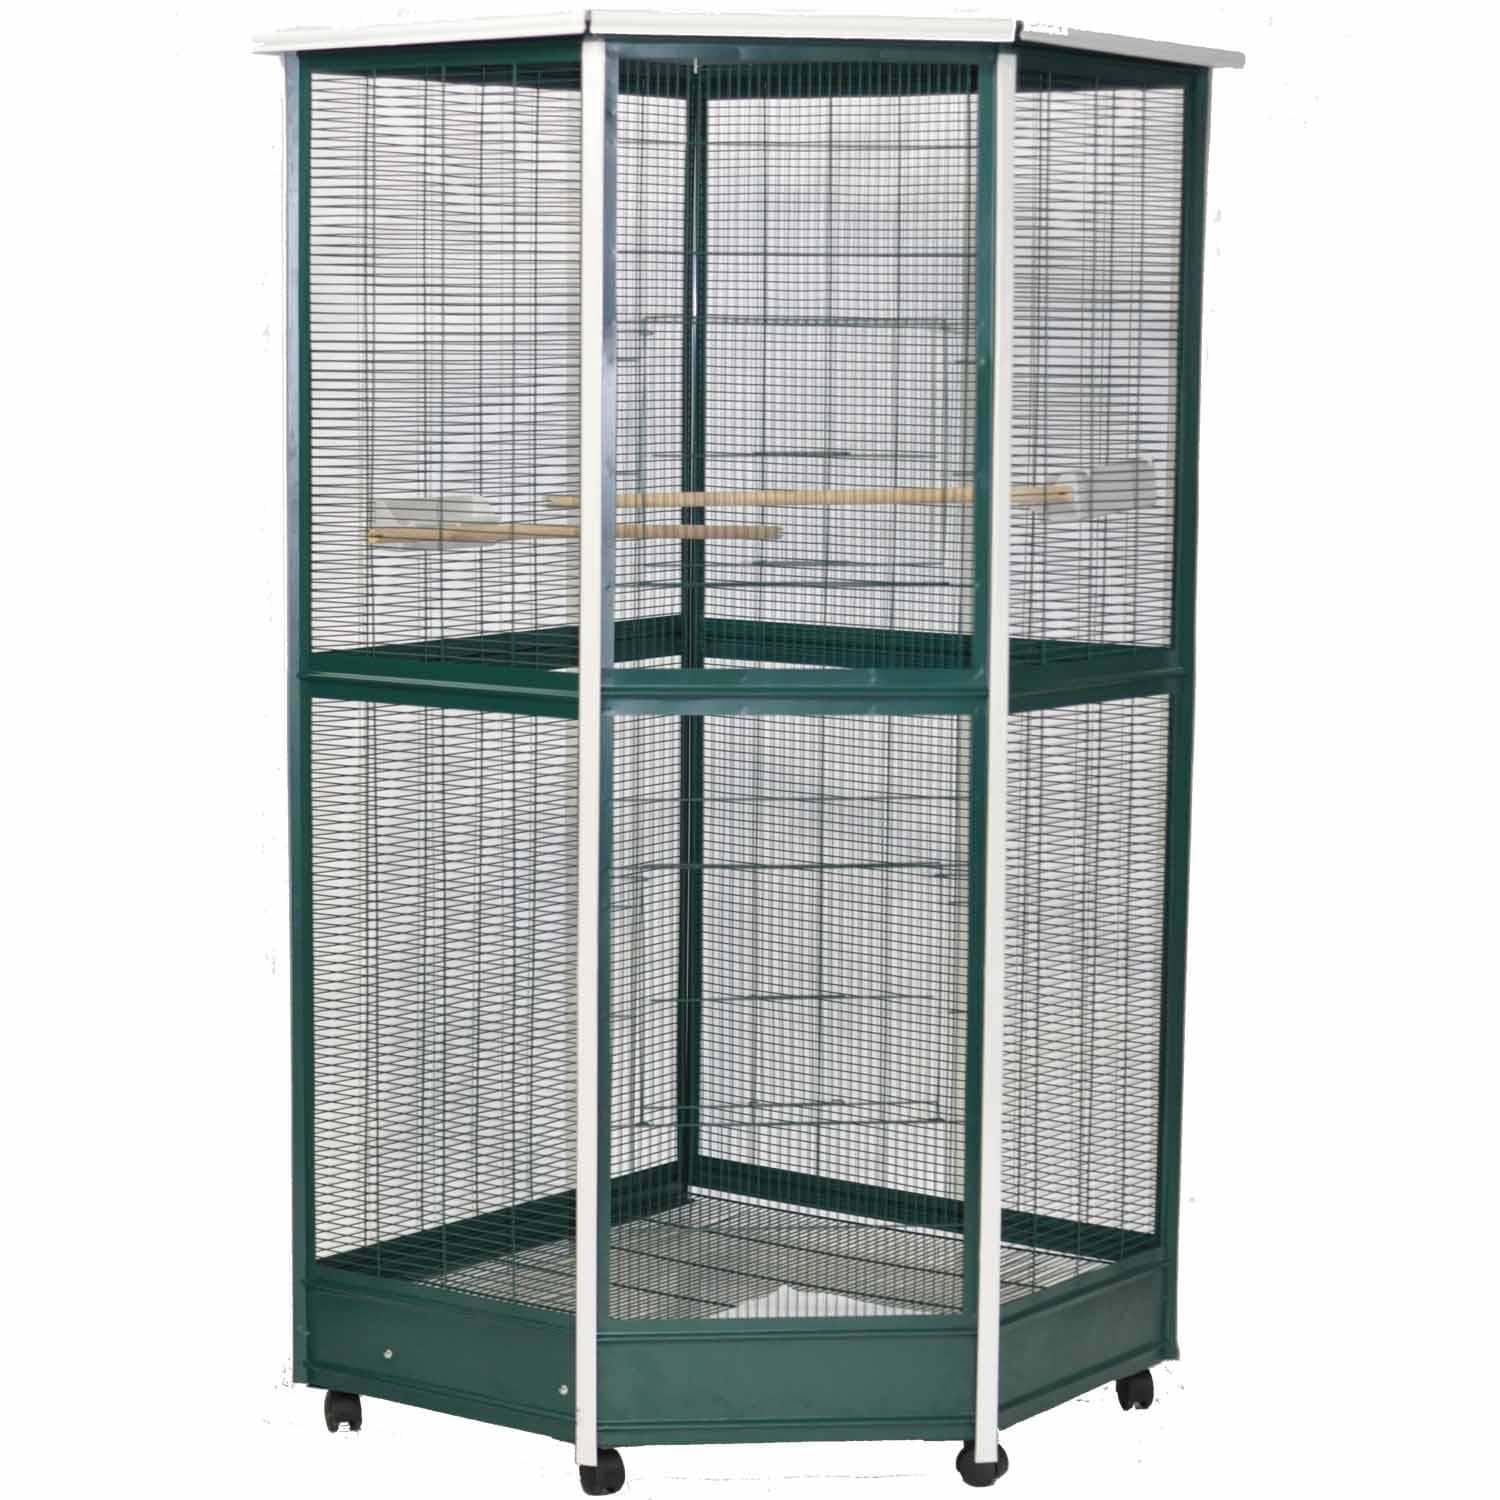 UPC 644472017168 product image for A&E Cage Company Green & White Corner Aviary Bird Cage, 52